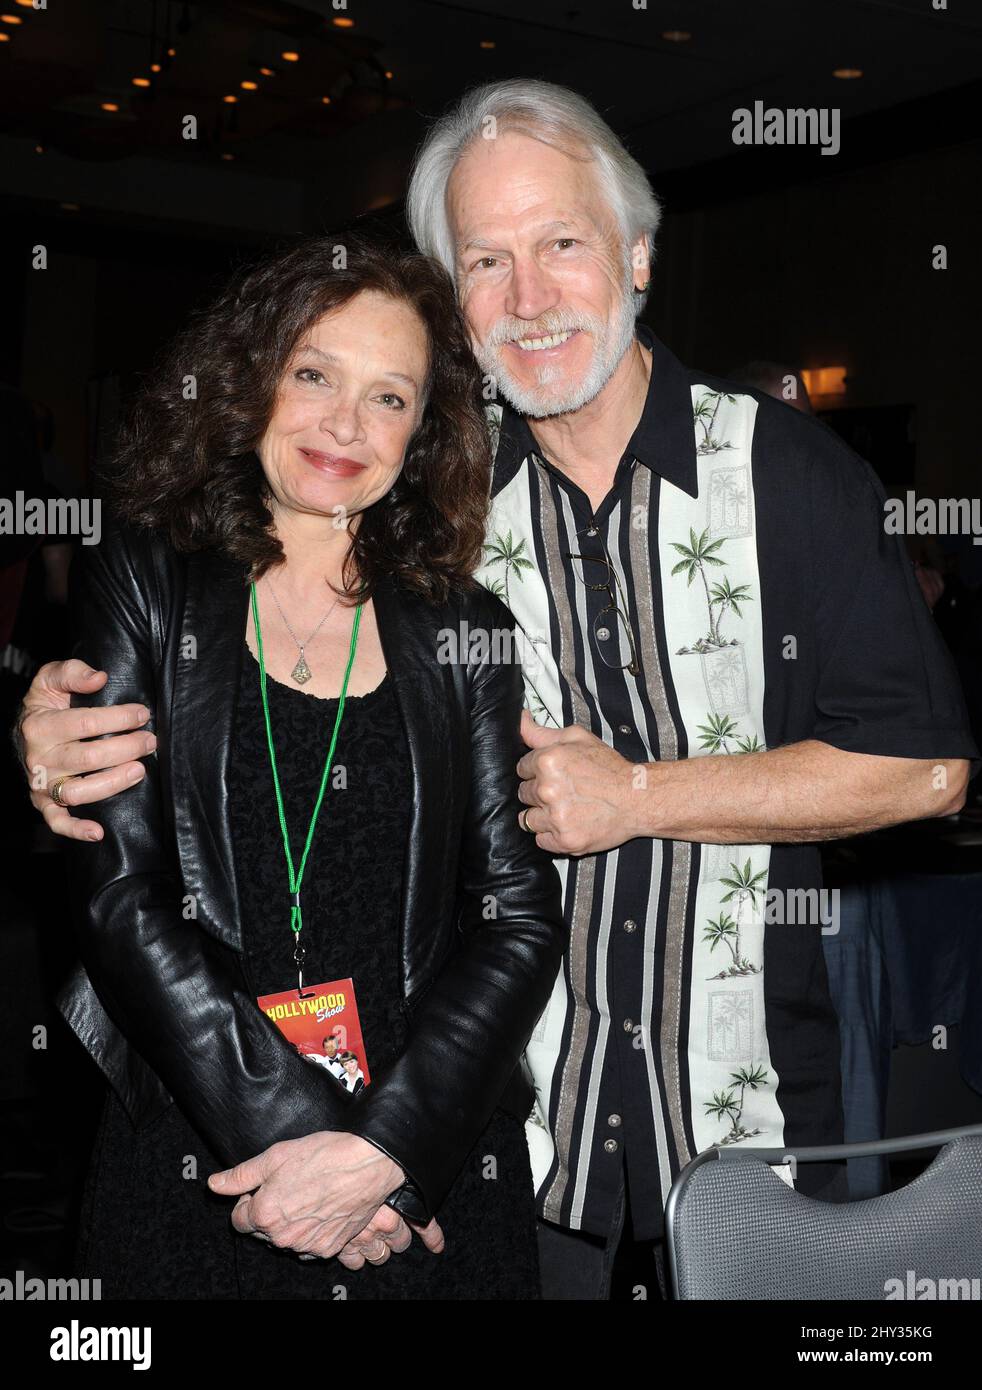 Deborah Van Valkenburgh and Michael Beck attending the Hollywood Show, held at Loews Hollywood Hotel in Los Angeles, California. Stock Photo